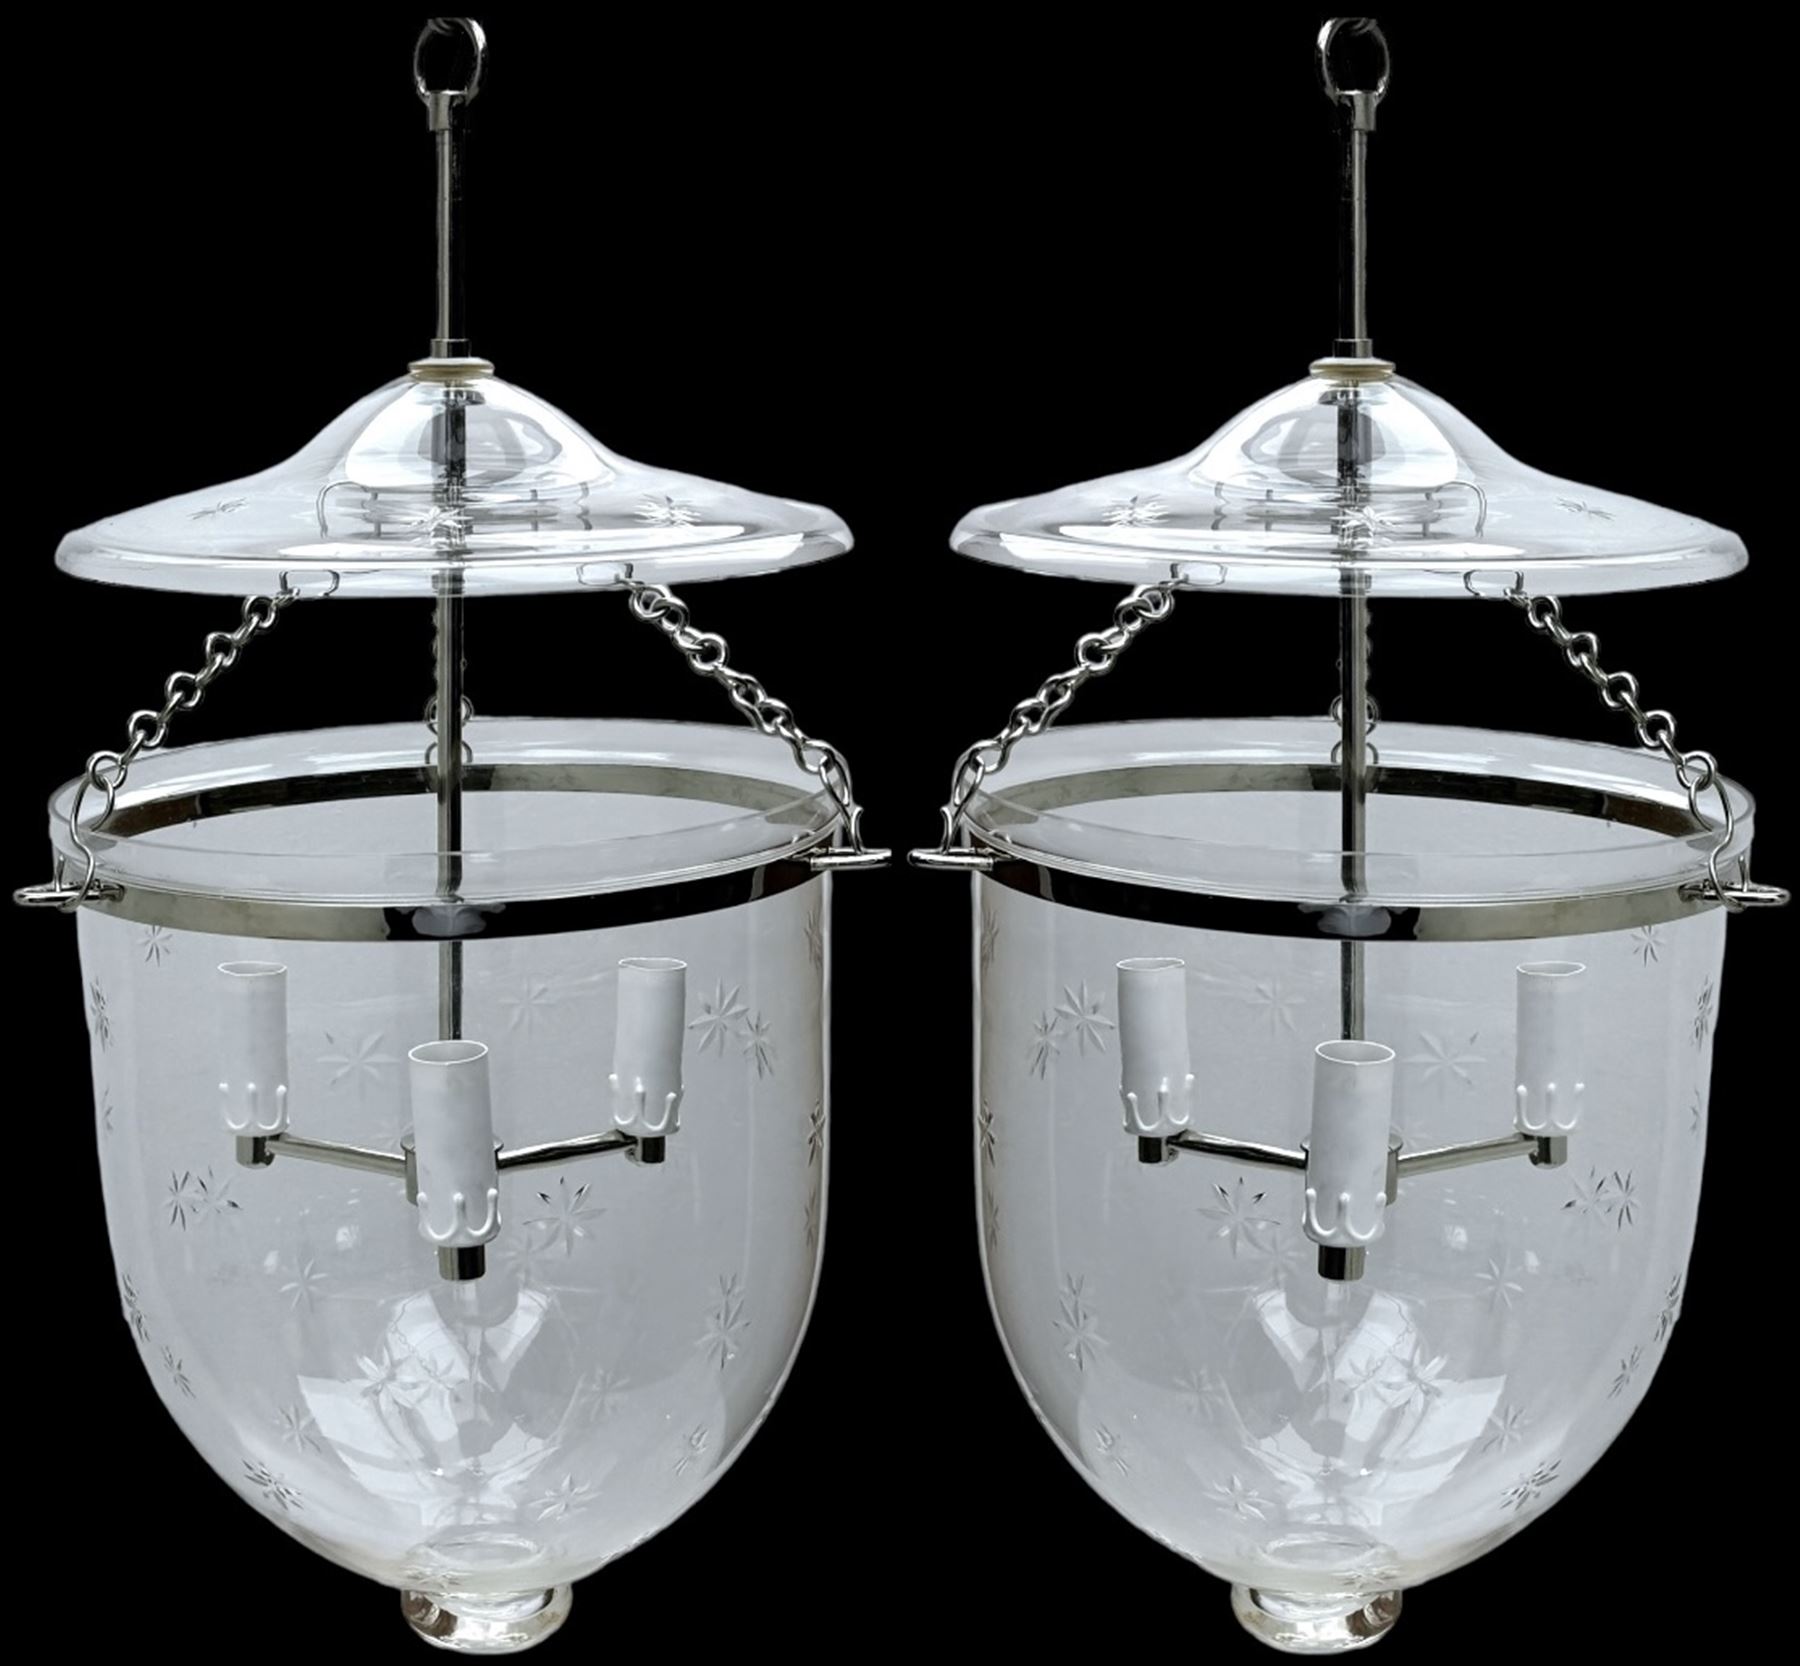 India Jane Interiors - pair of hallway glass bell jar ceiling lanterns